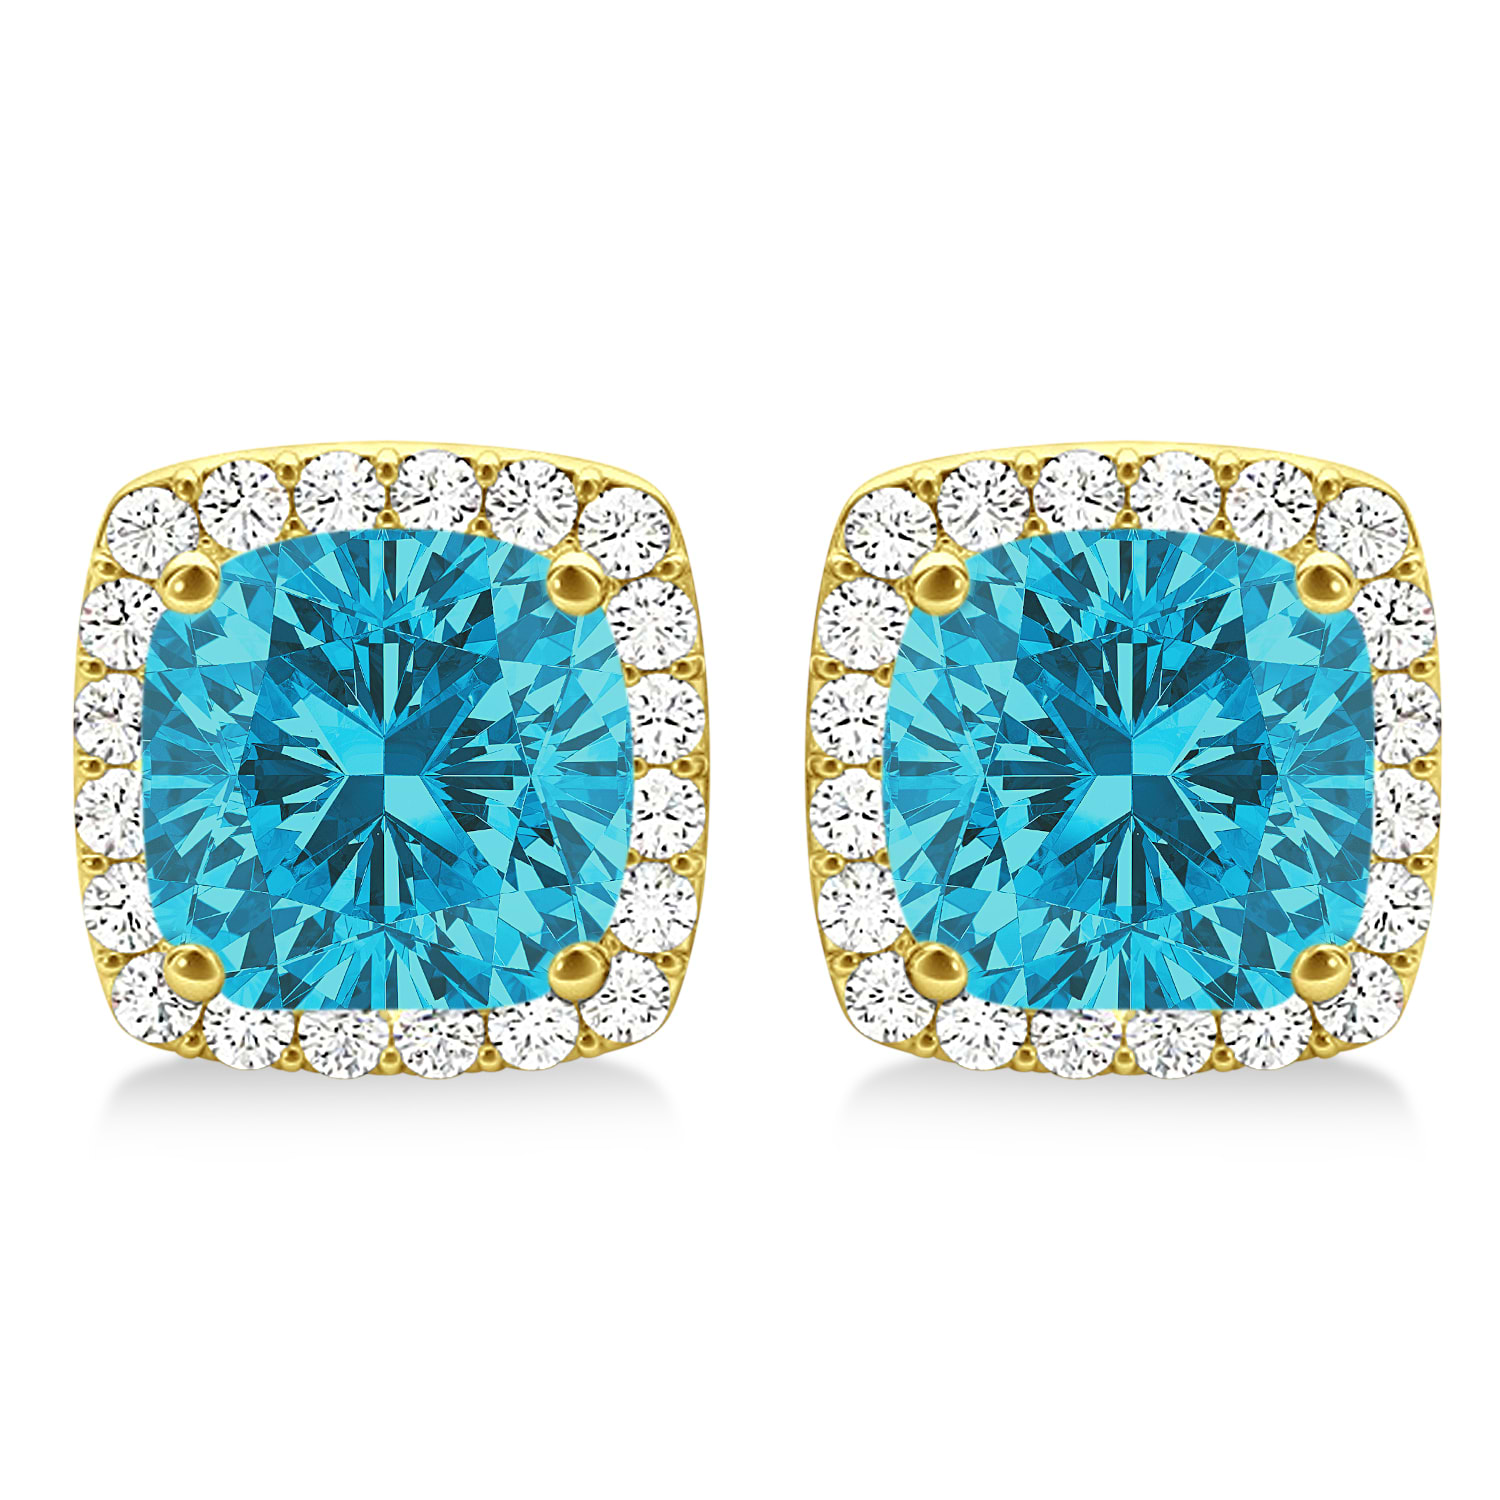 Cushion Cut Blue & White Diamond Halo Earrings 14k Yellow Gold (1.22ct)